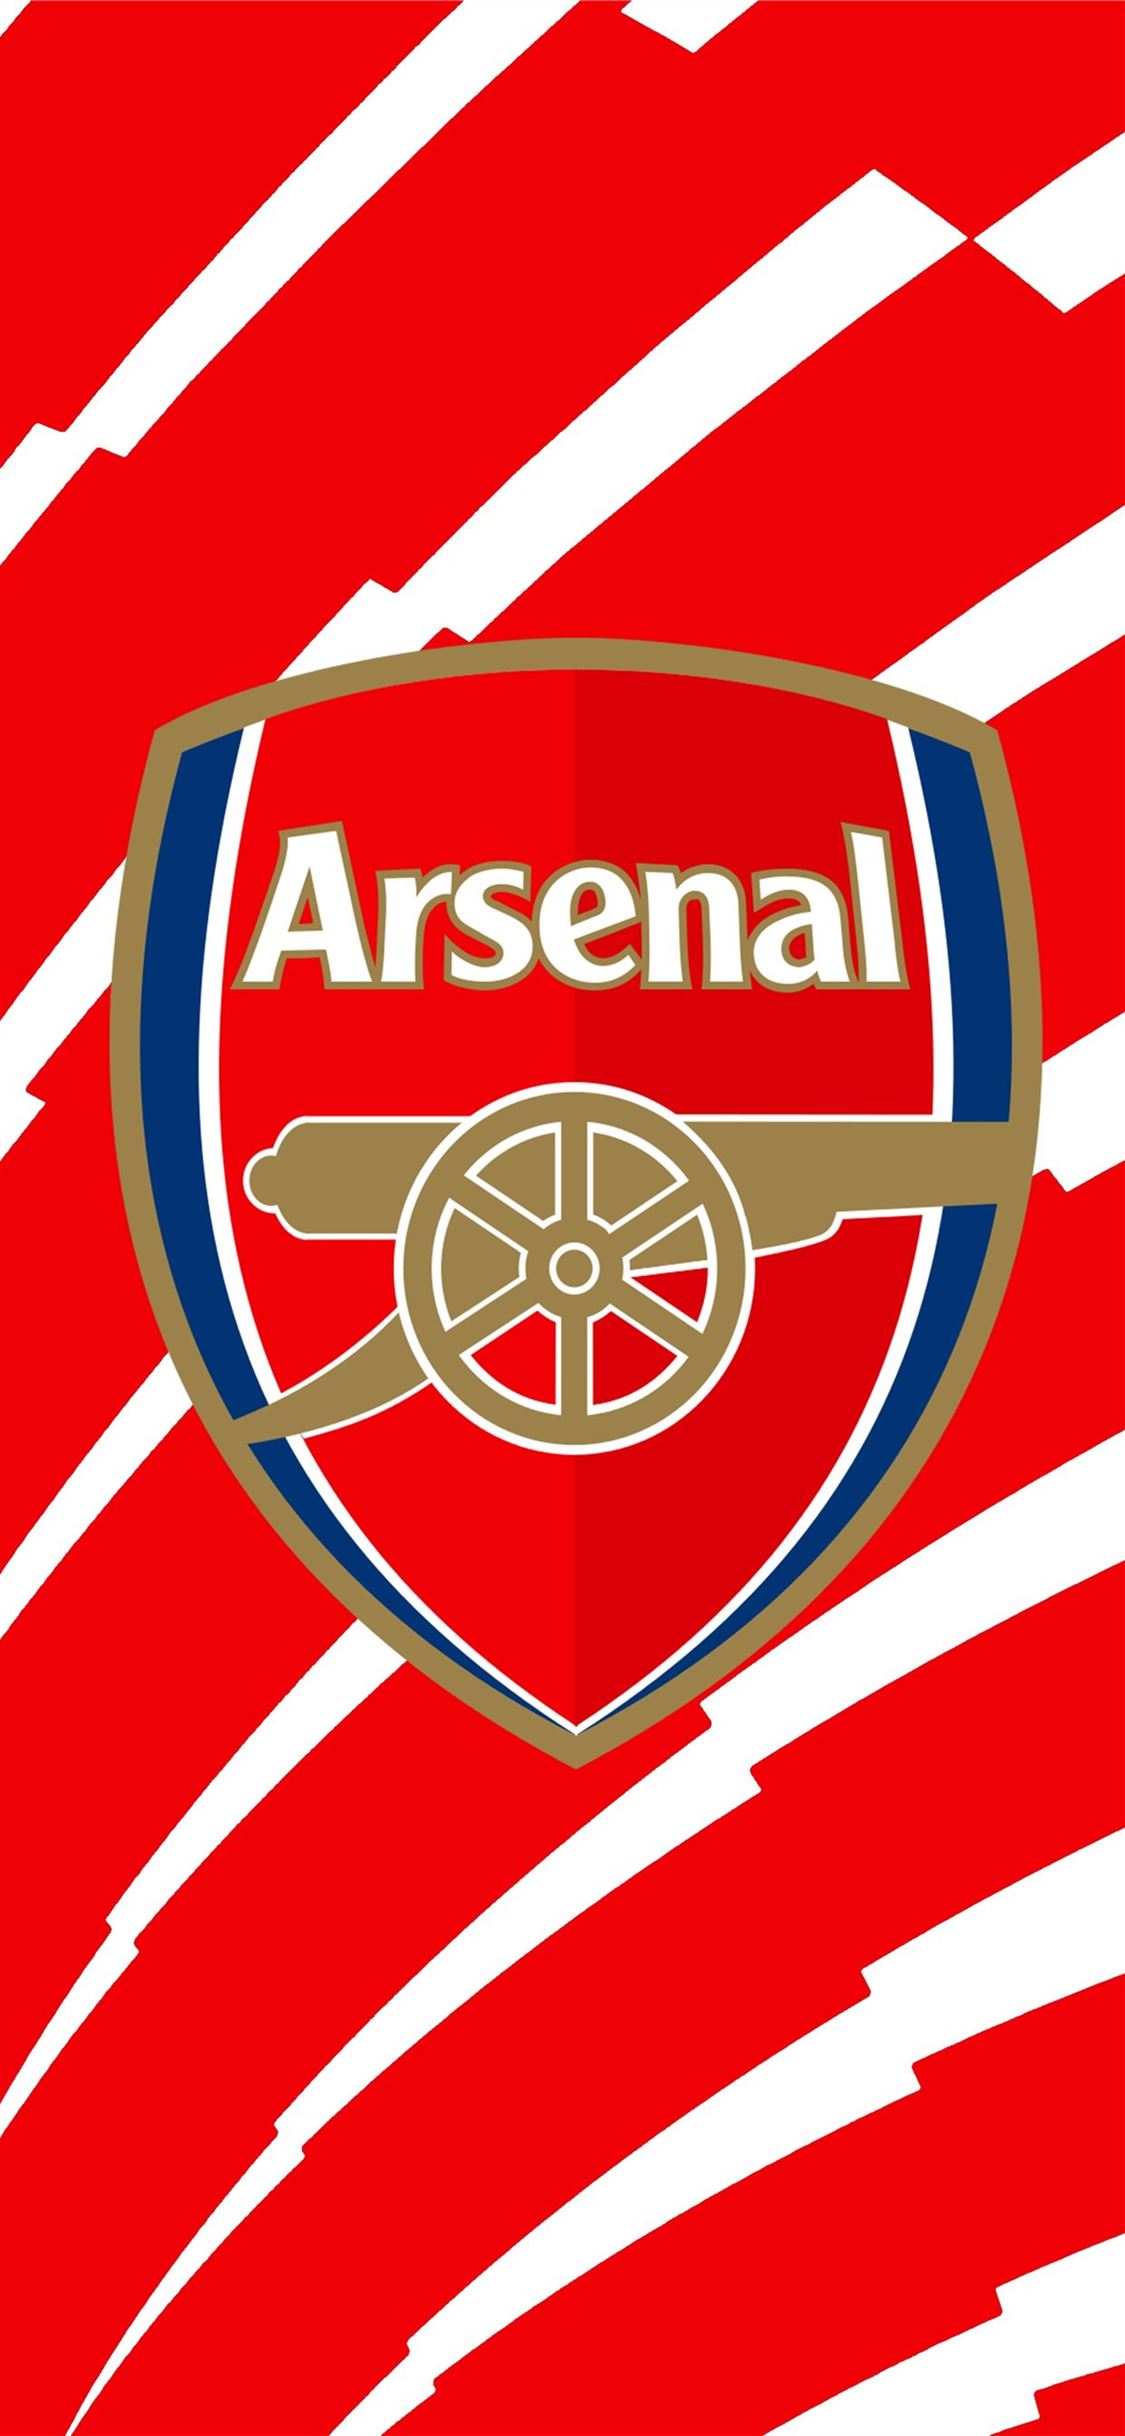 Arsenal wallpapers